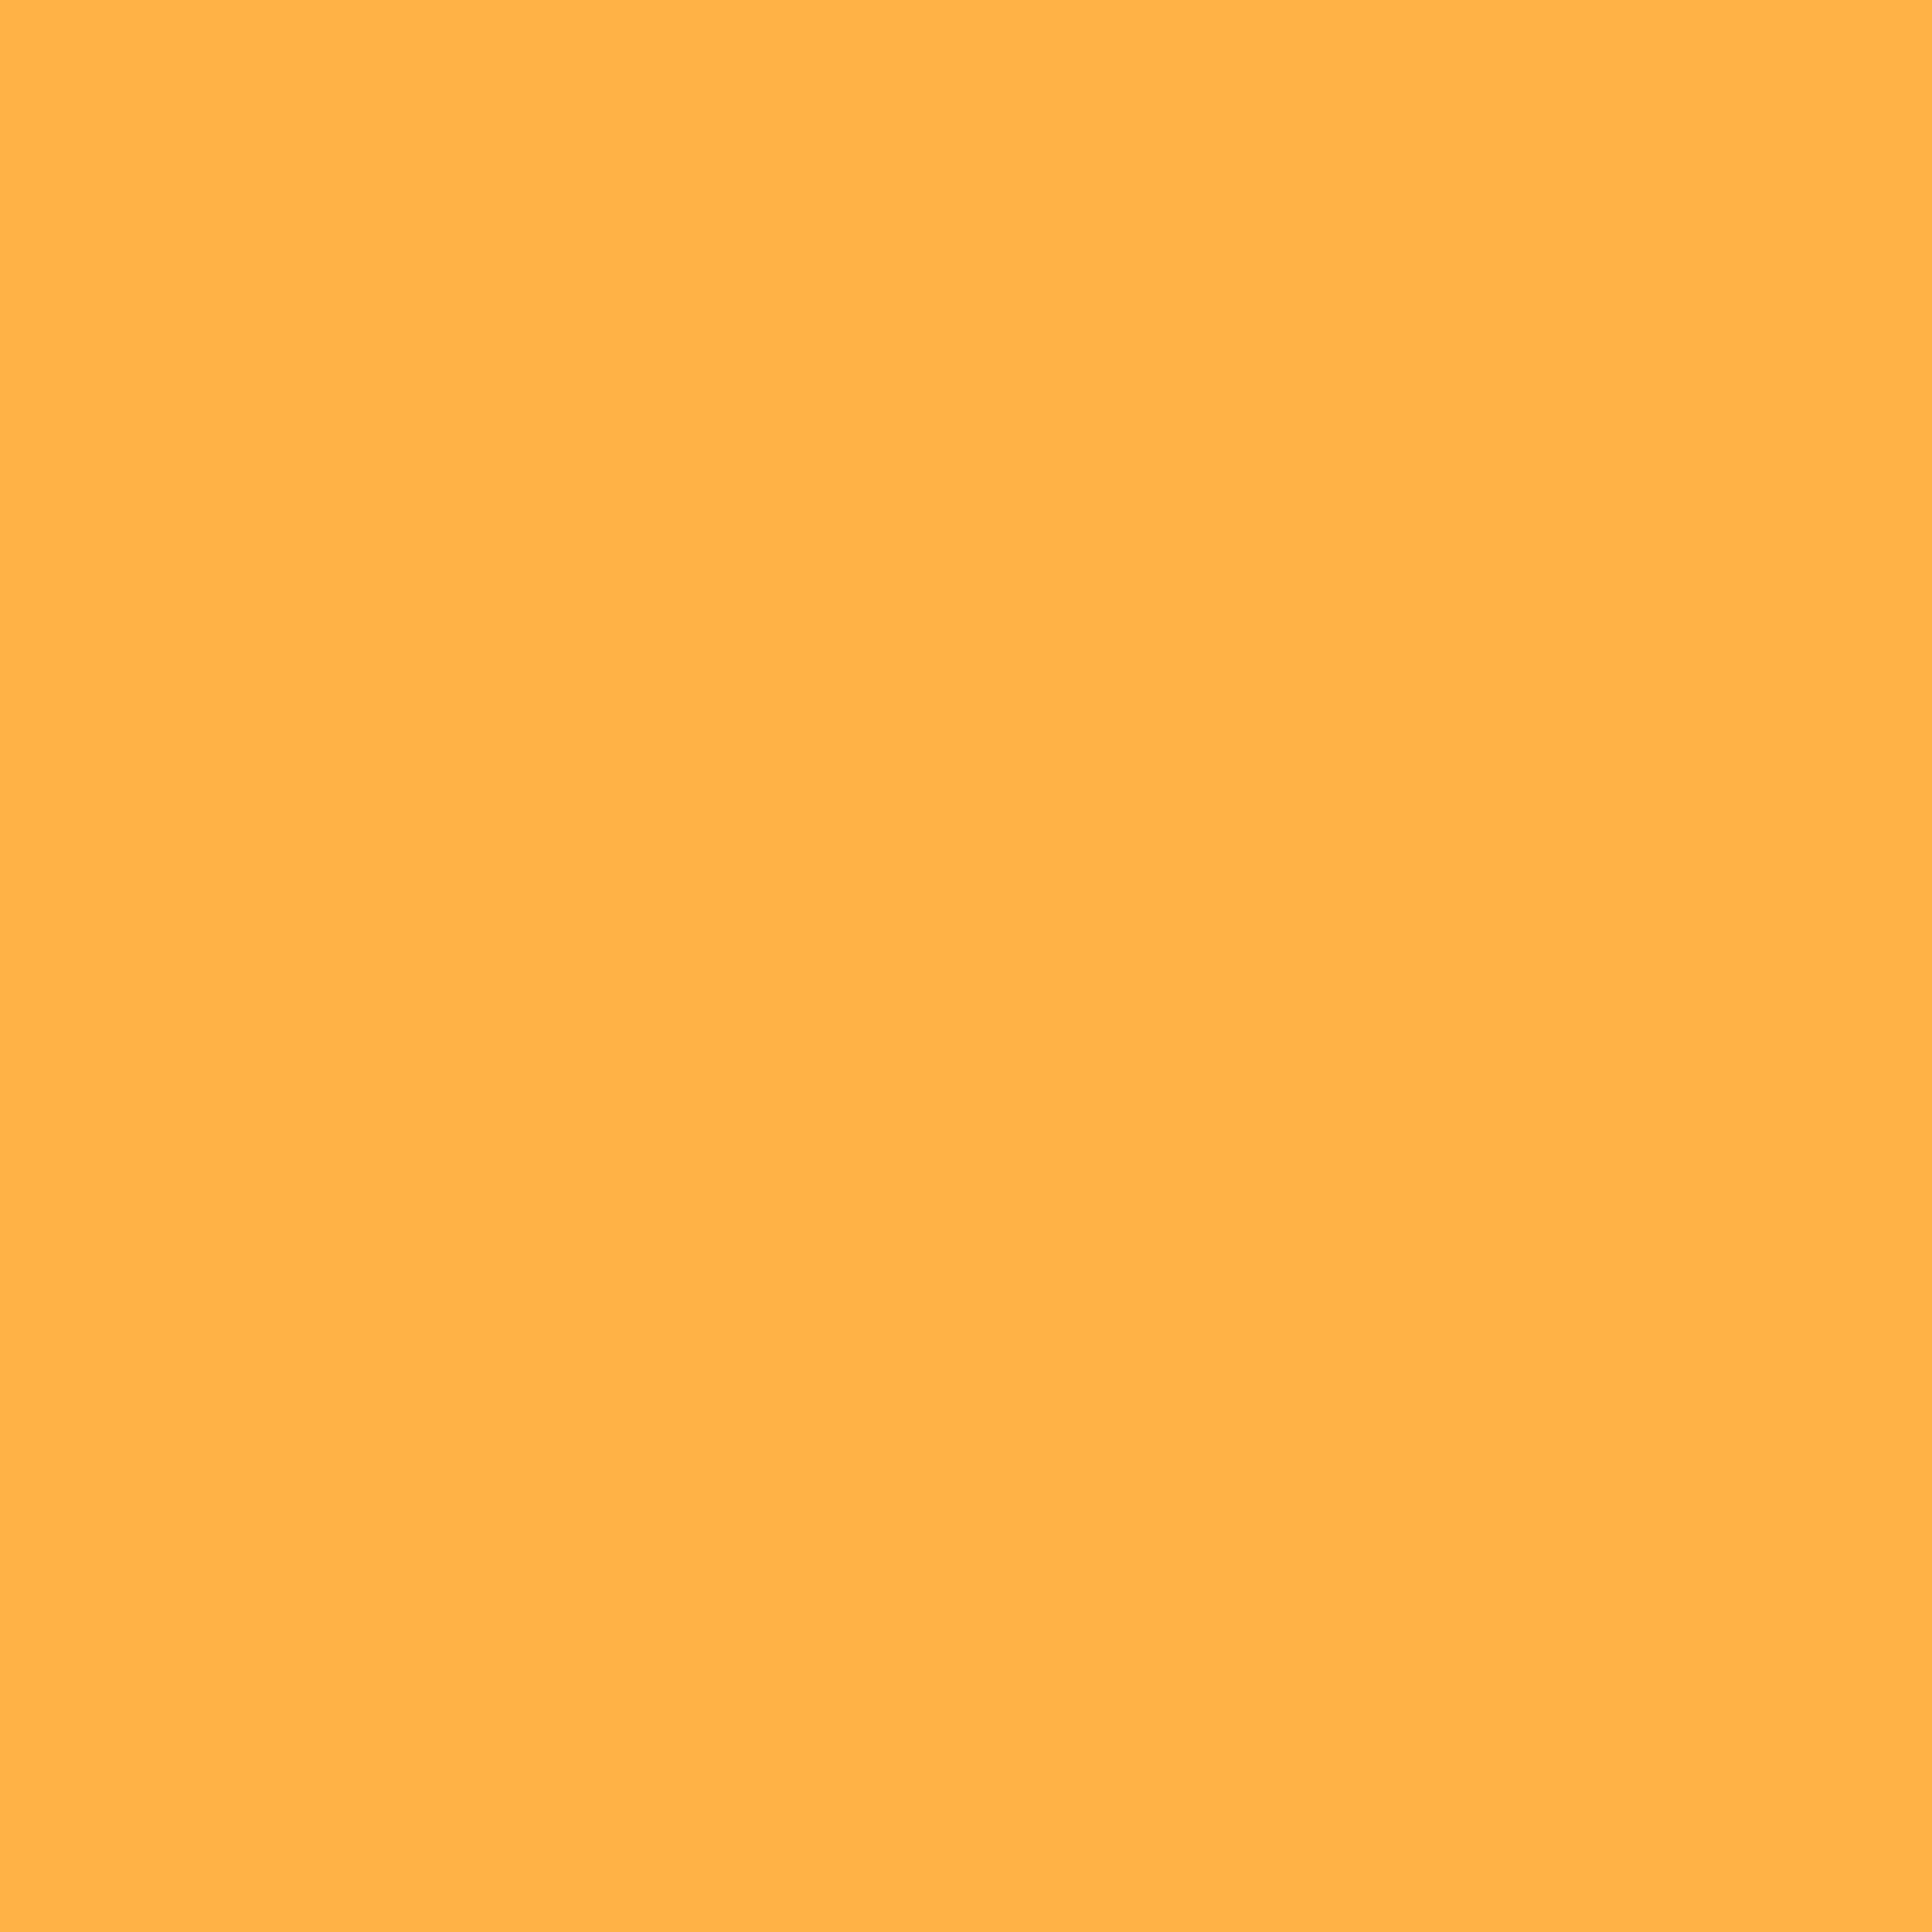 2732x2732 Pastel Orange Solid Color Background